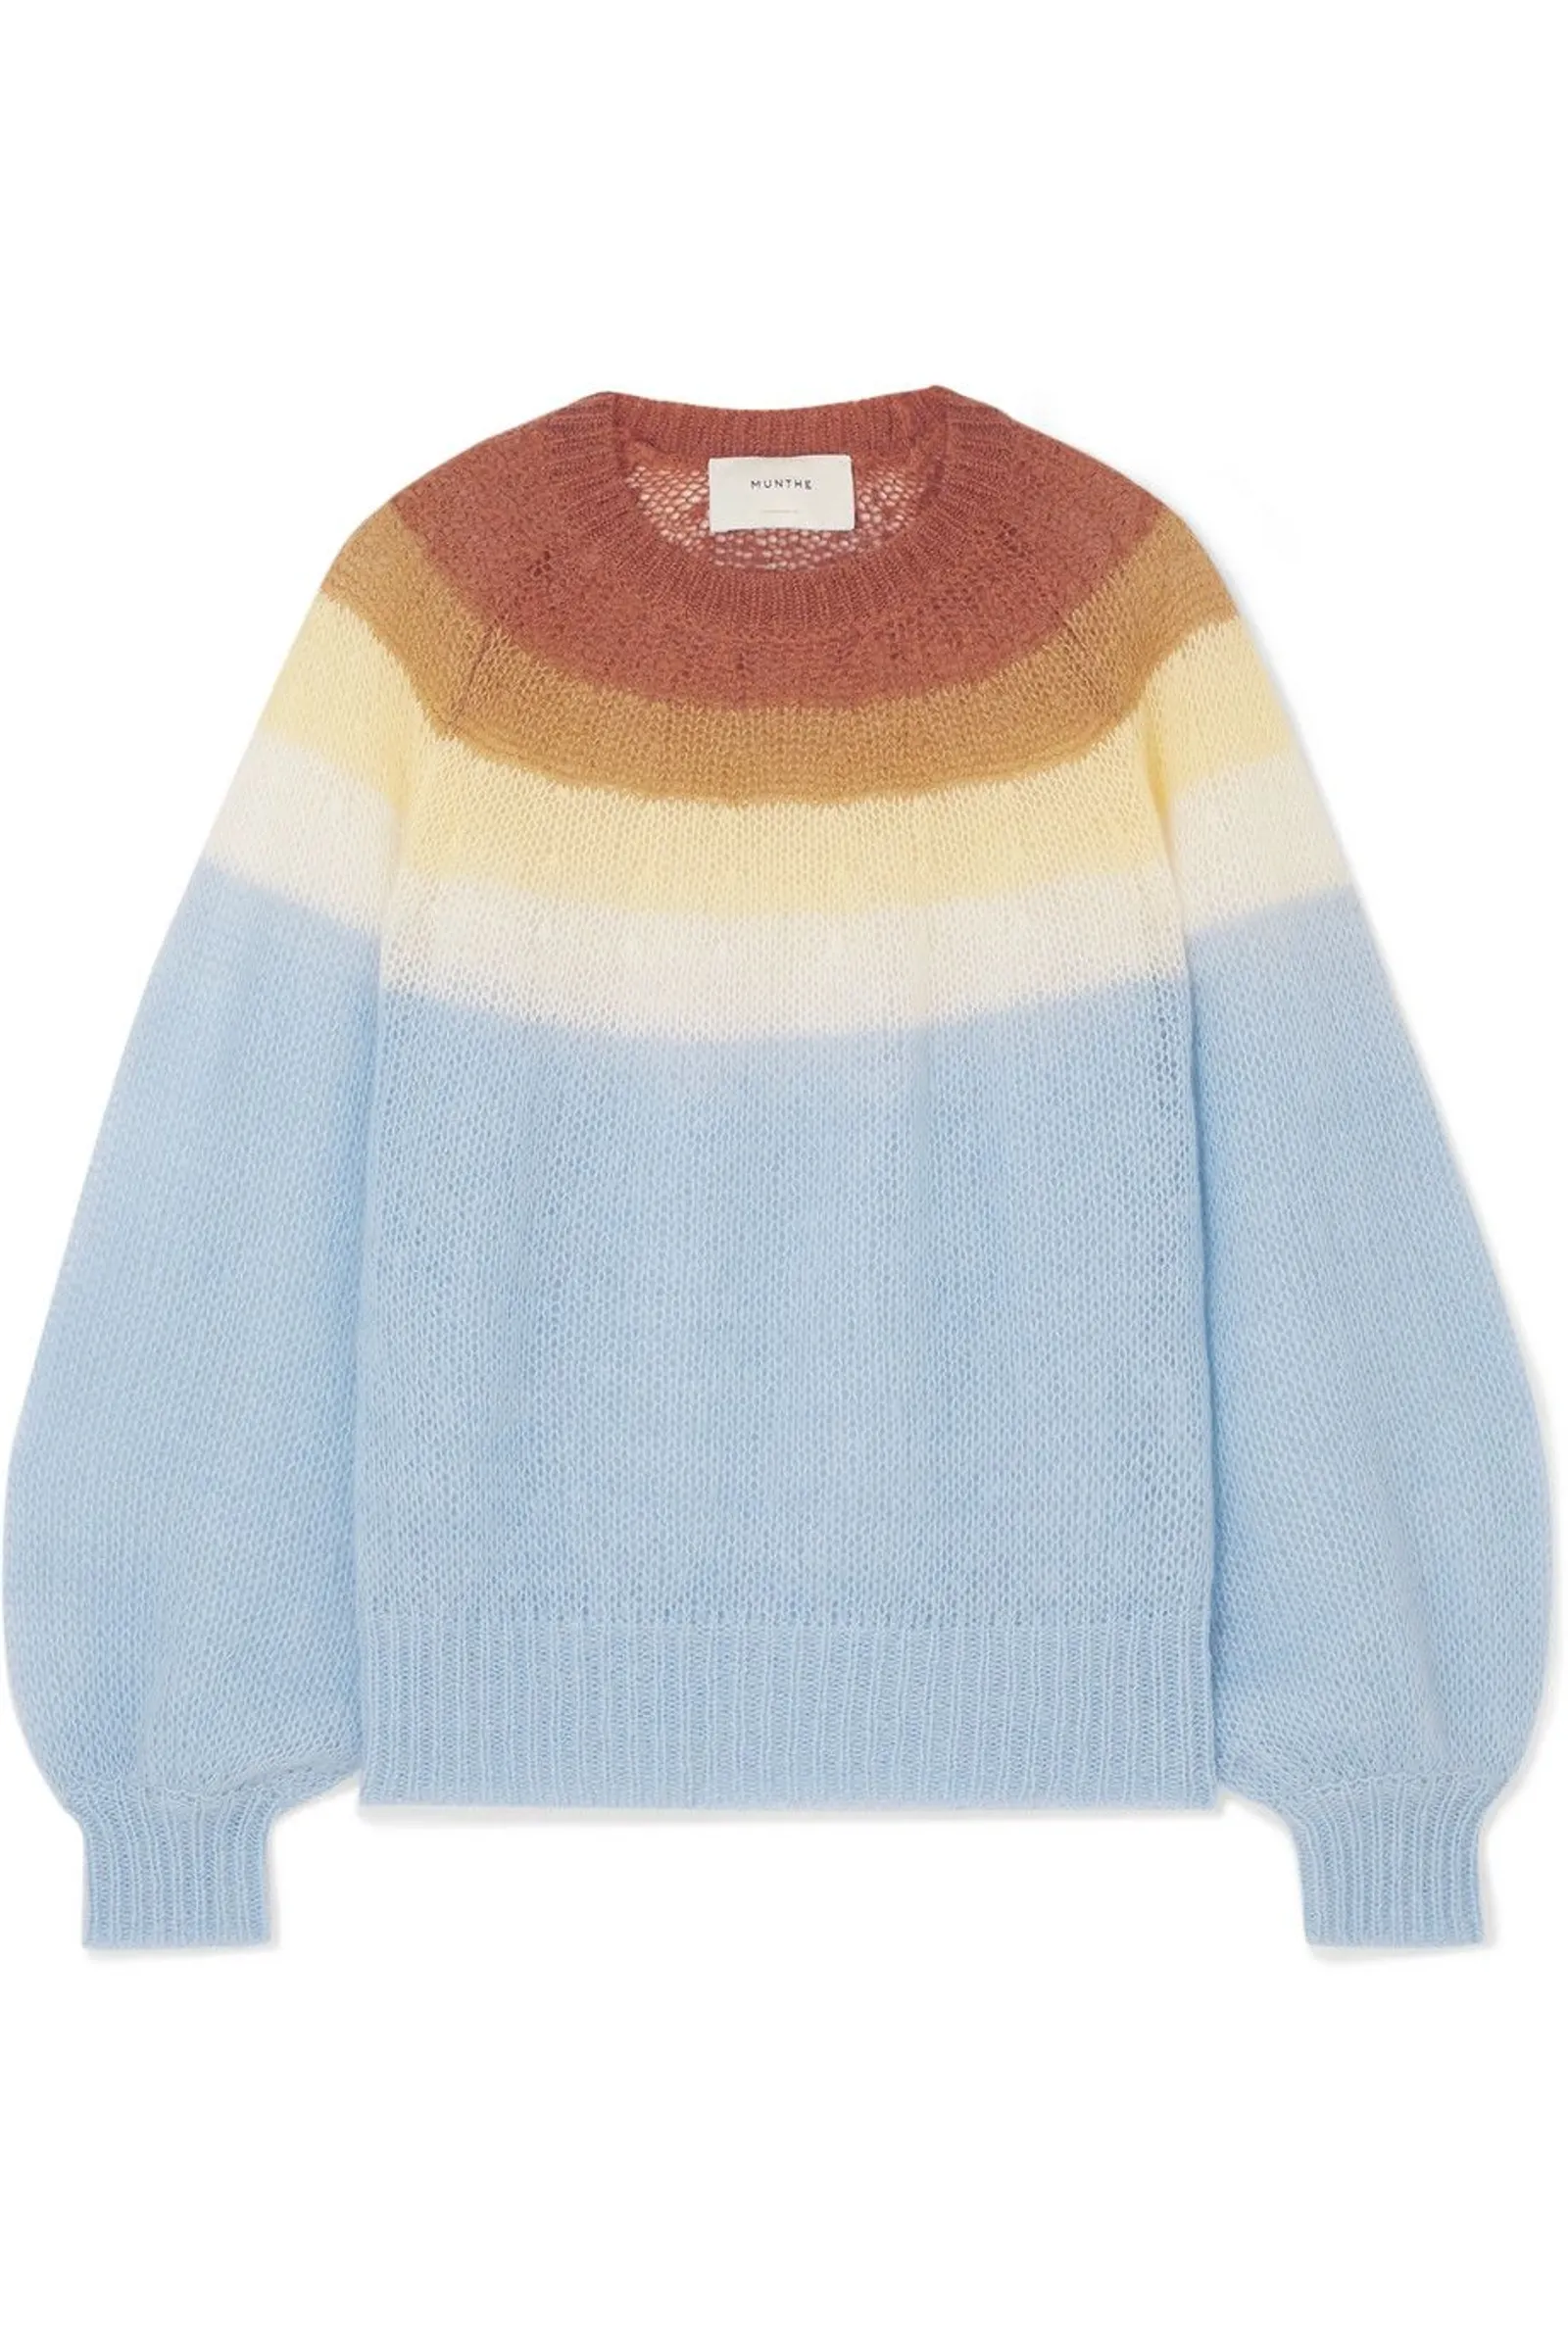 #PopbelaOOTD: Sweater Musim Panas yang Chic